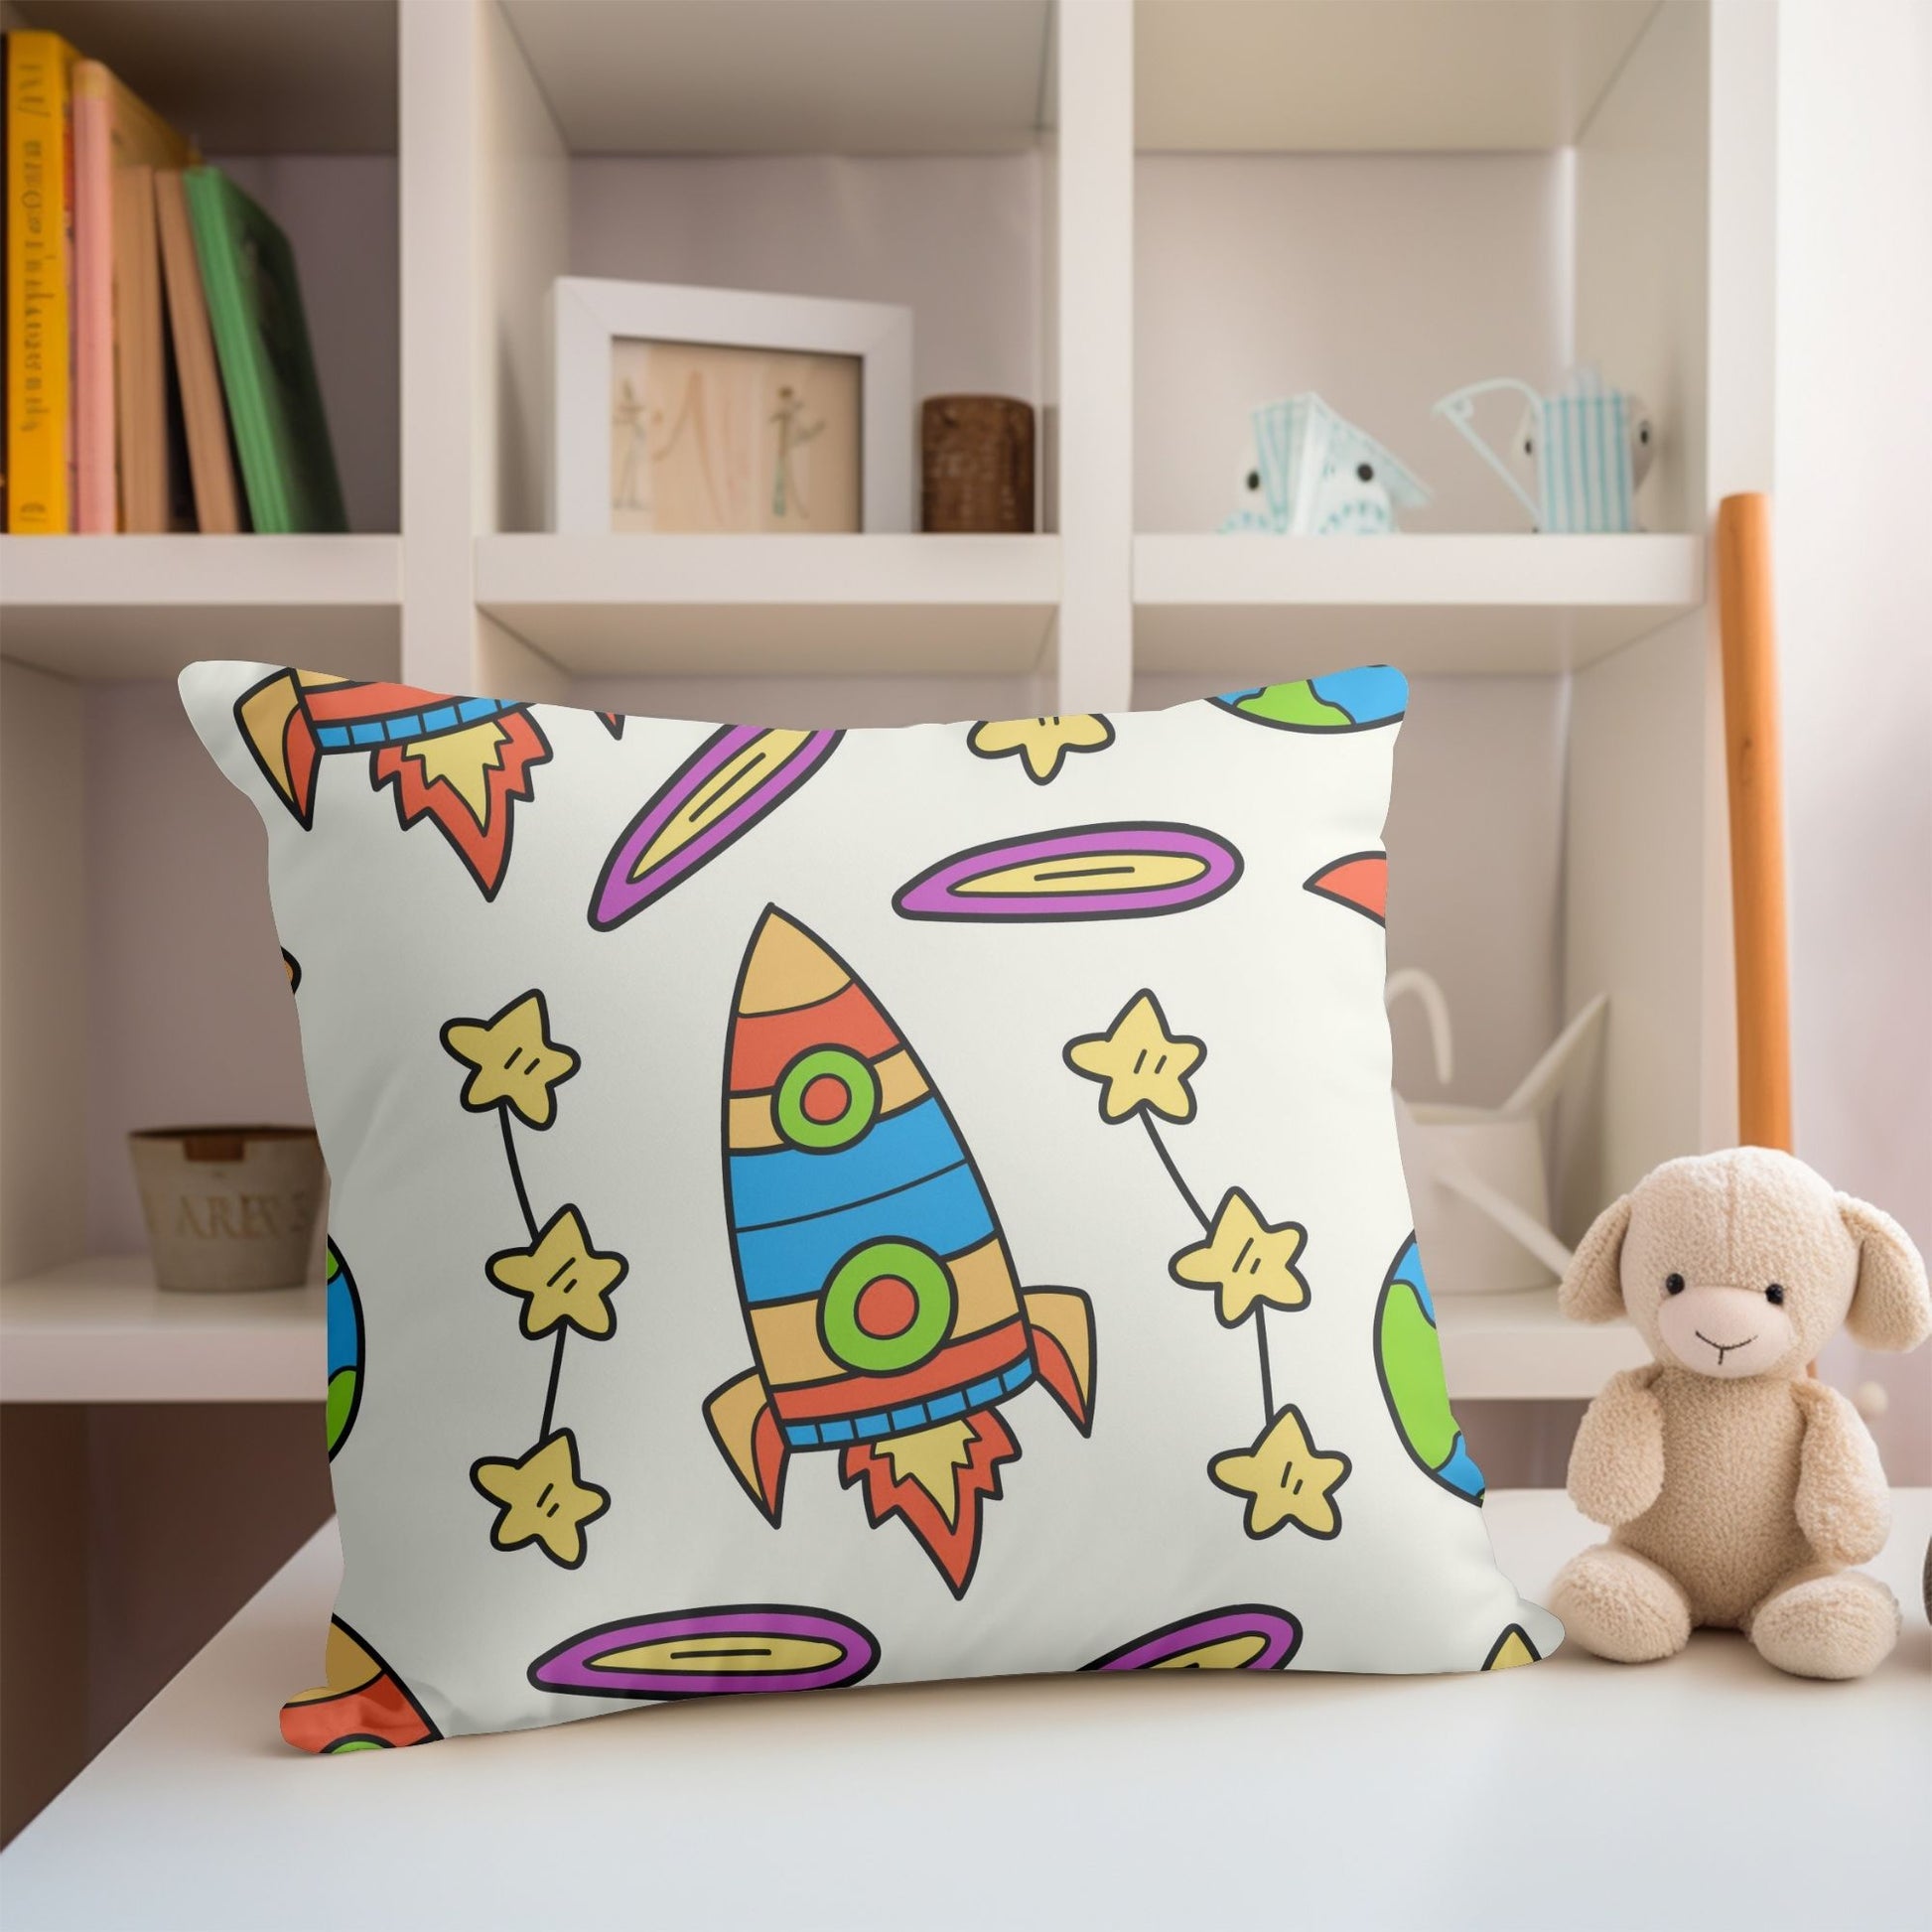 Kids rocket ship pillow to inspire dreams of intergalactic adventures.